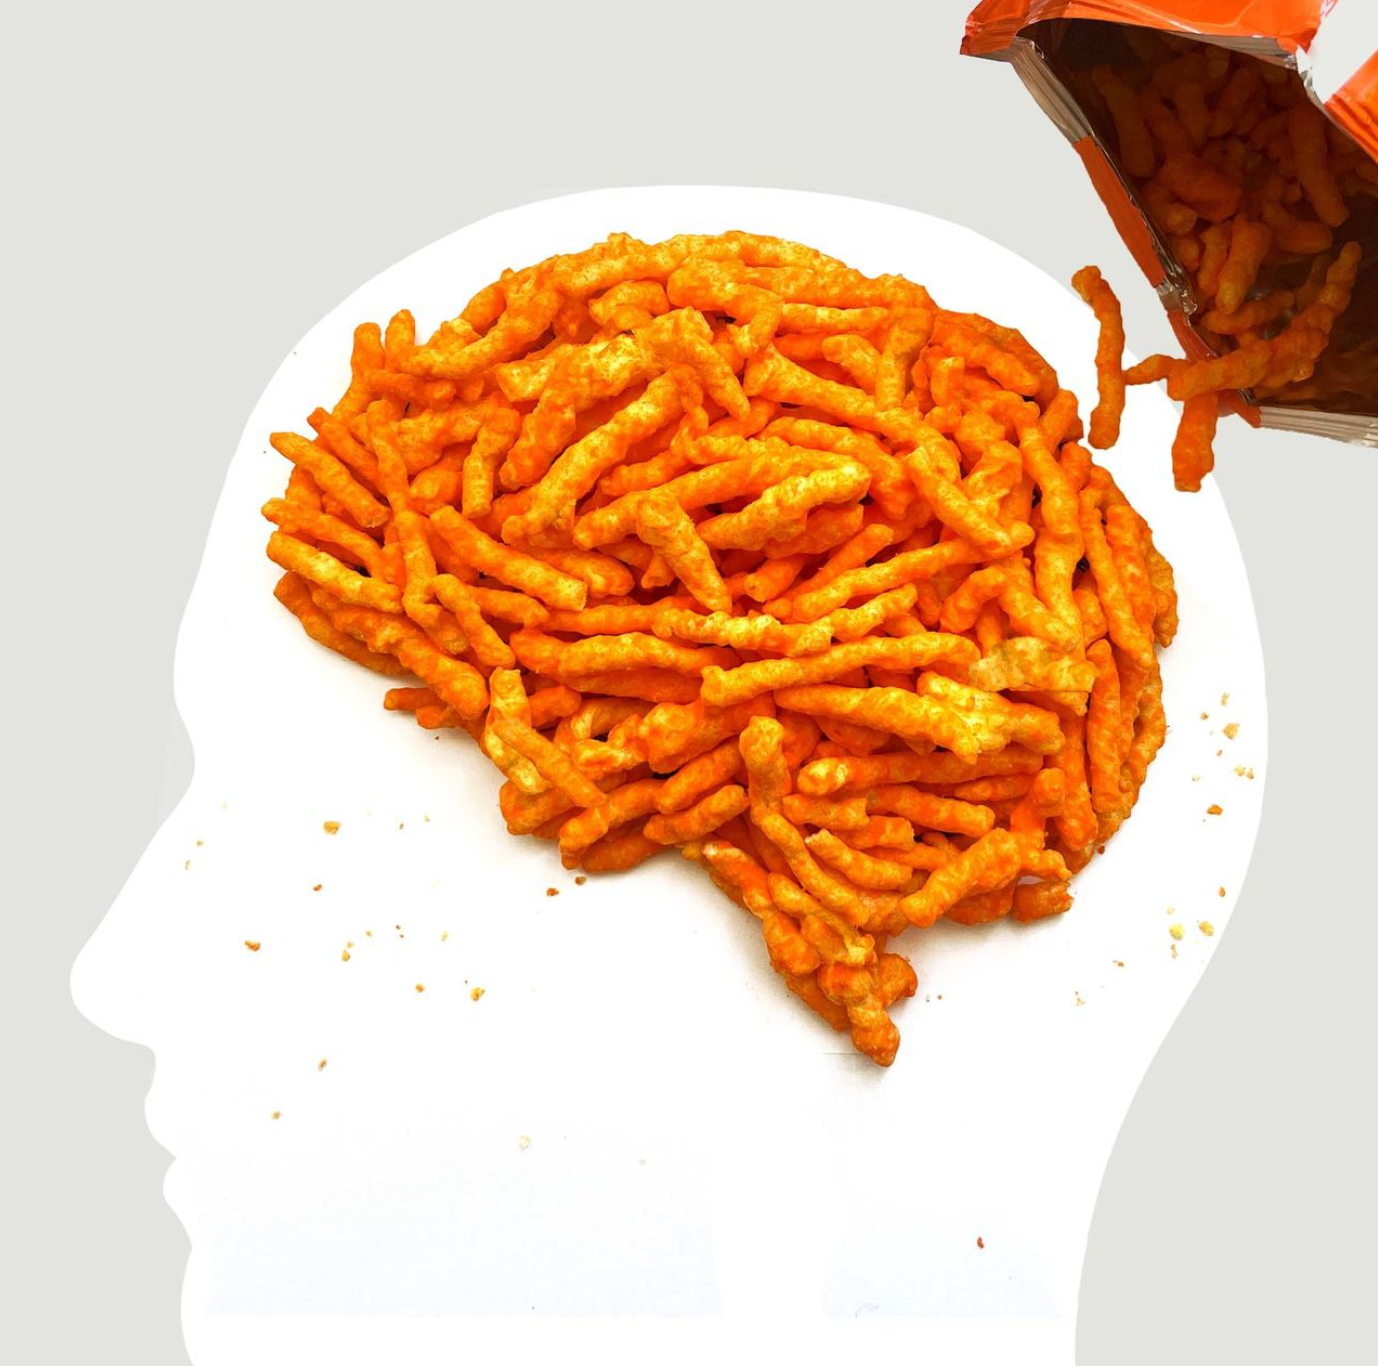 Brain made of Cheetos